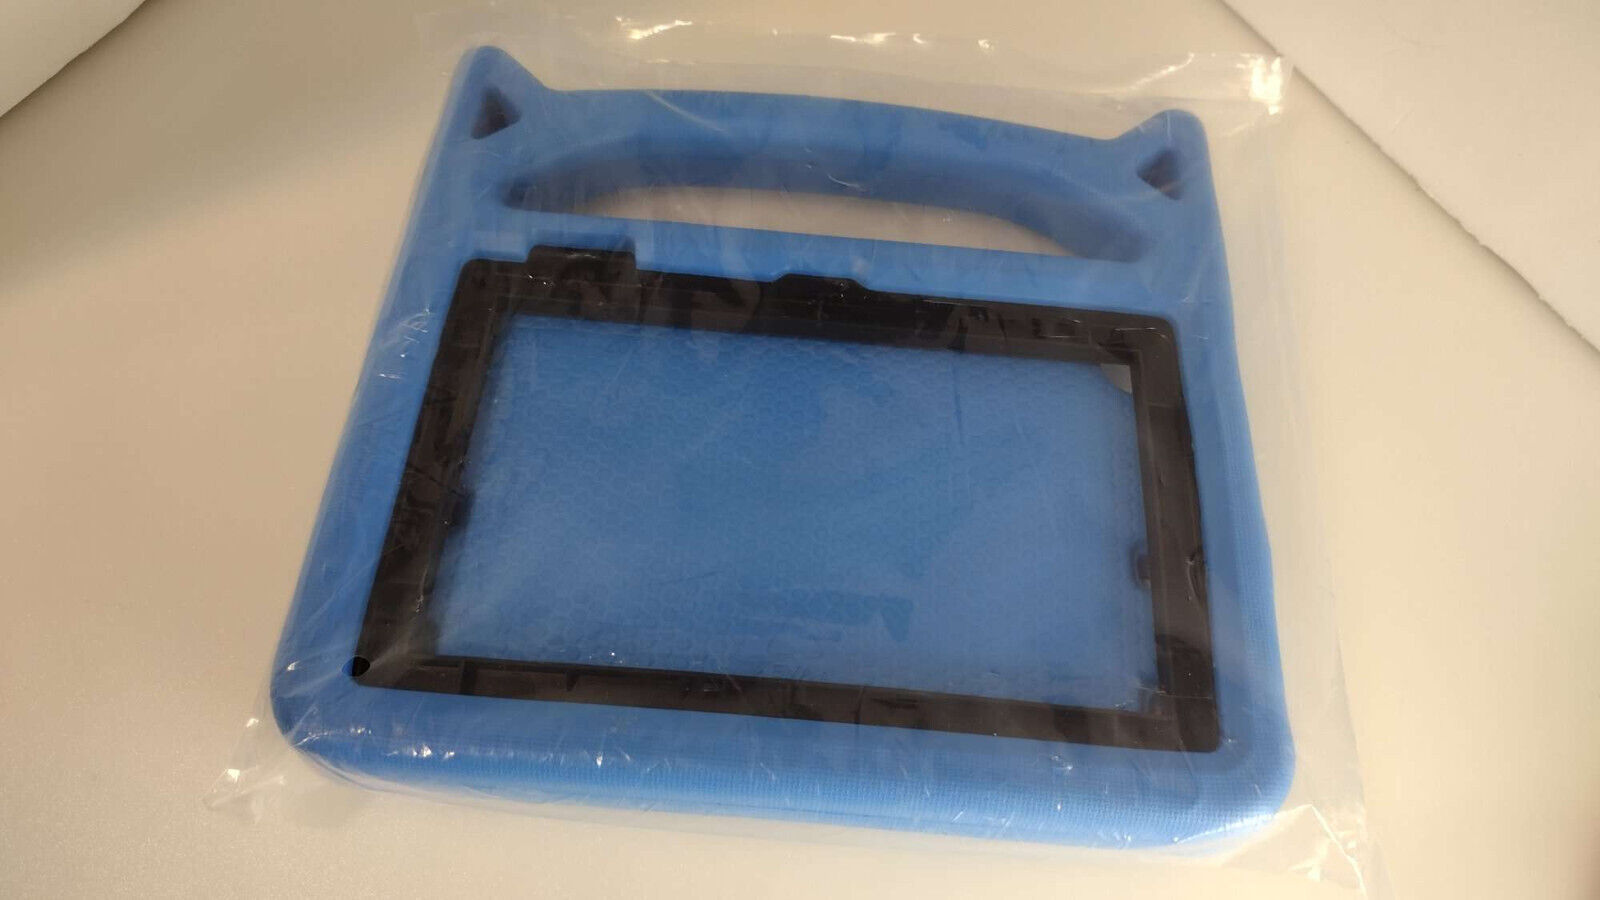 2022 New 7 Inch Kids Blue Tablet case - $7.61